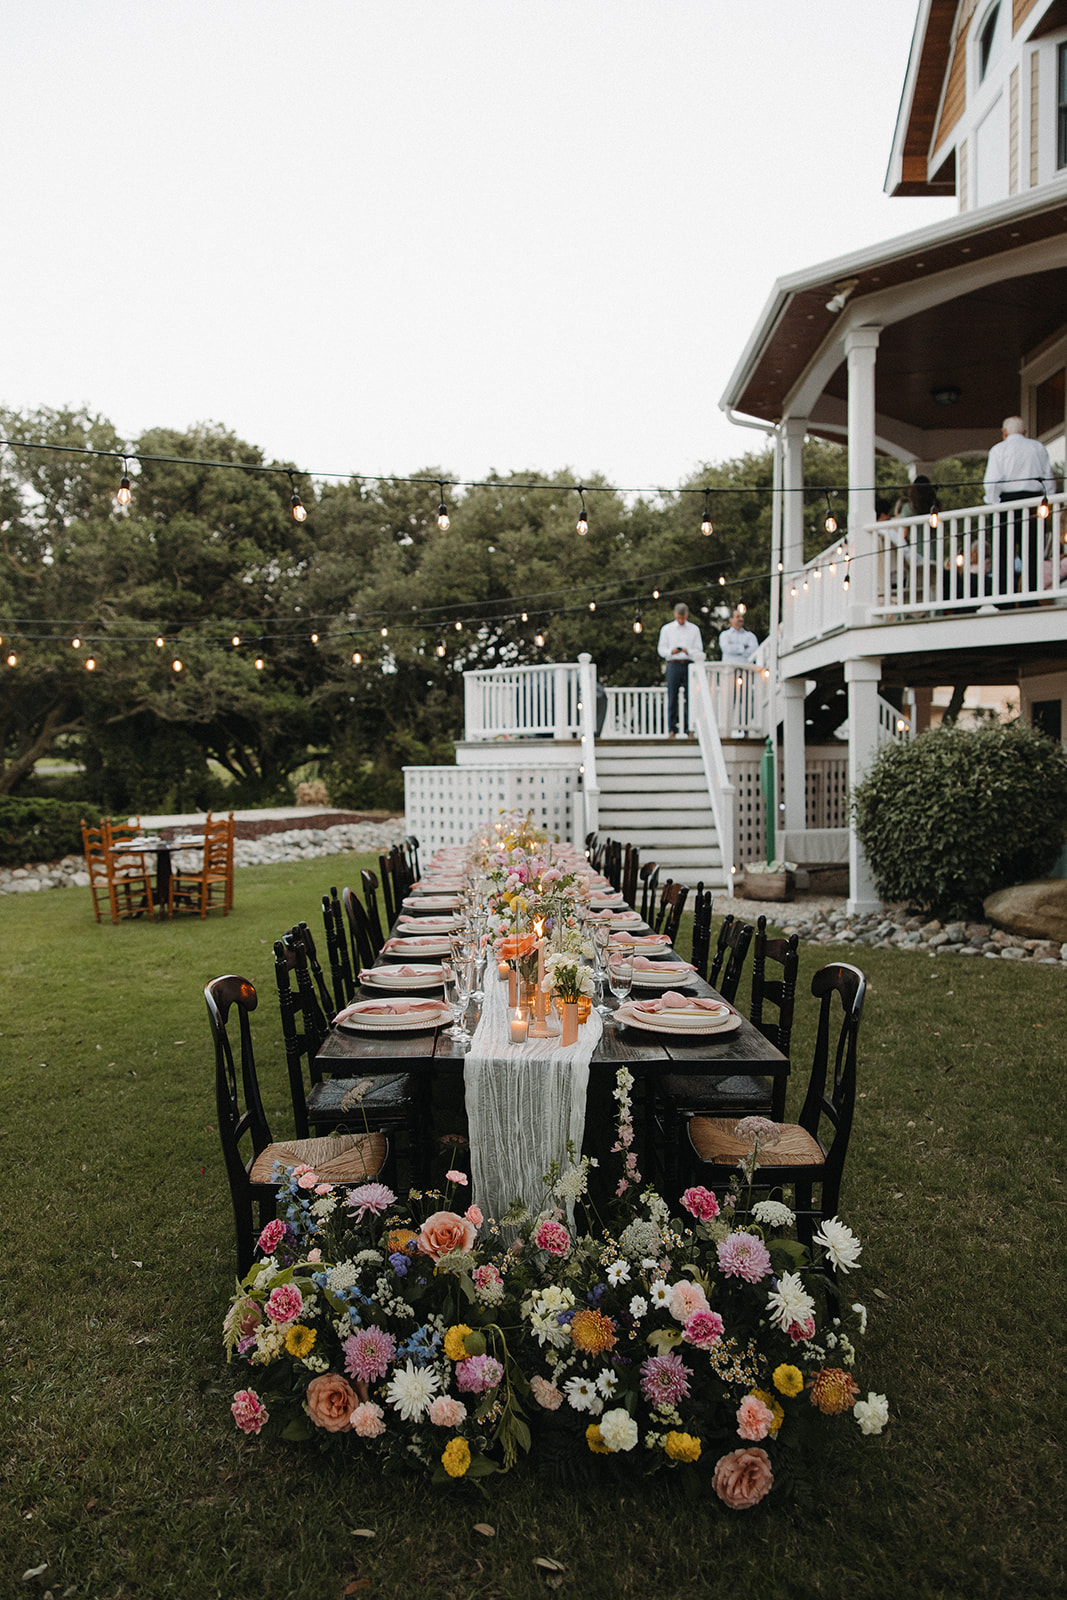 floral decor at backyard wedding reception